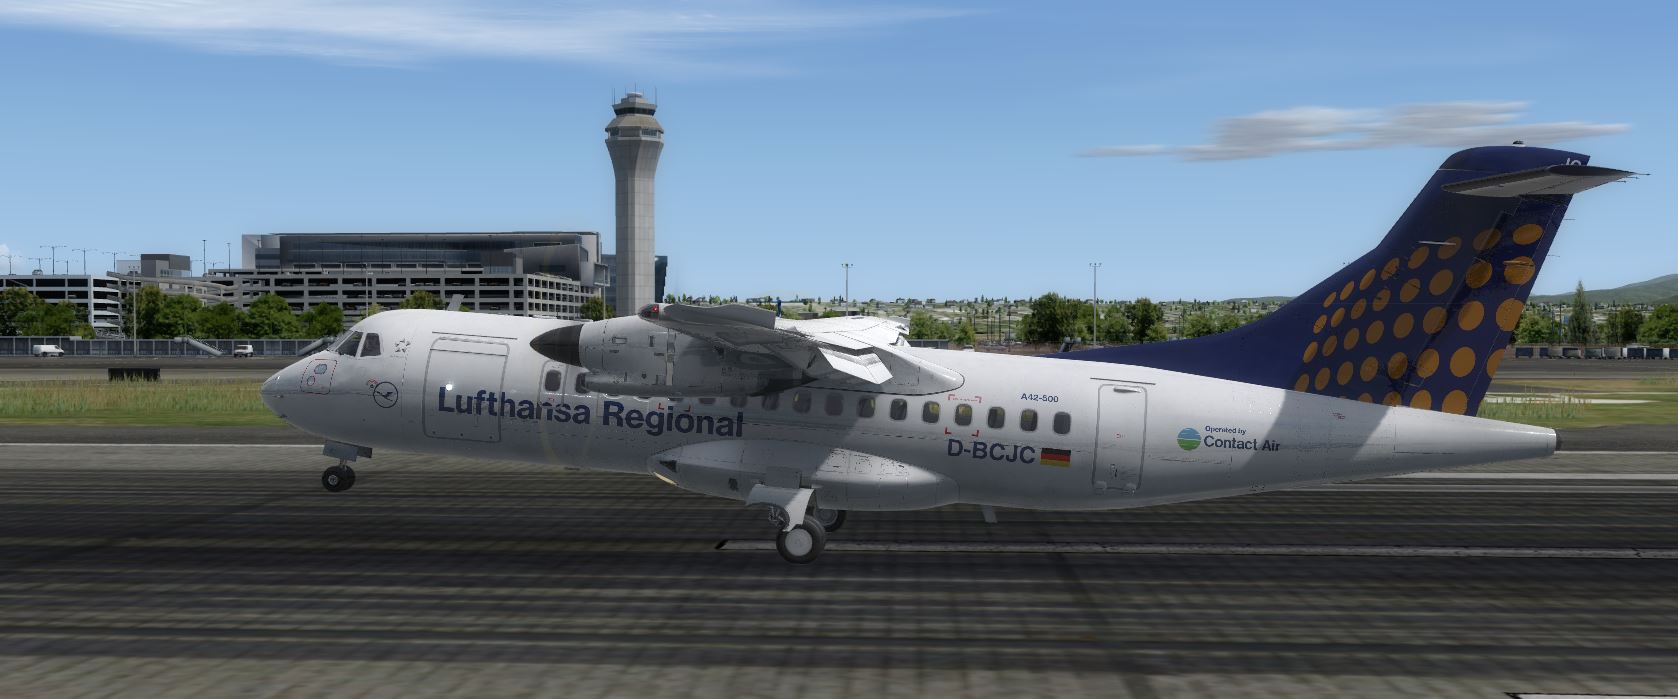 ATR42-500 Lufthansa-2540 